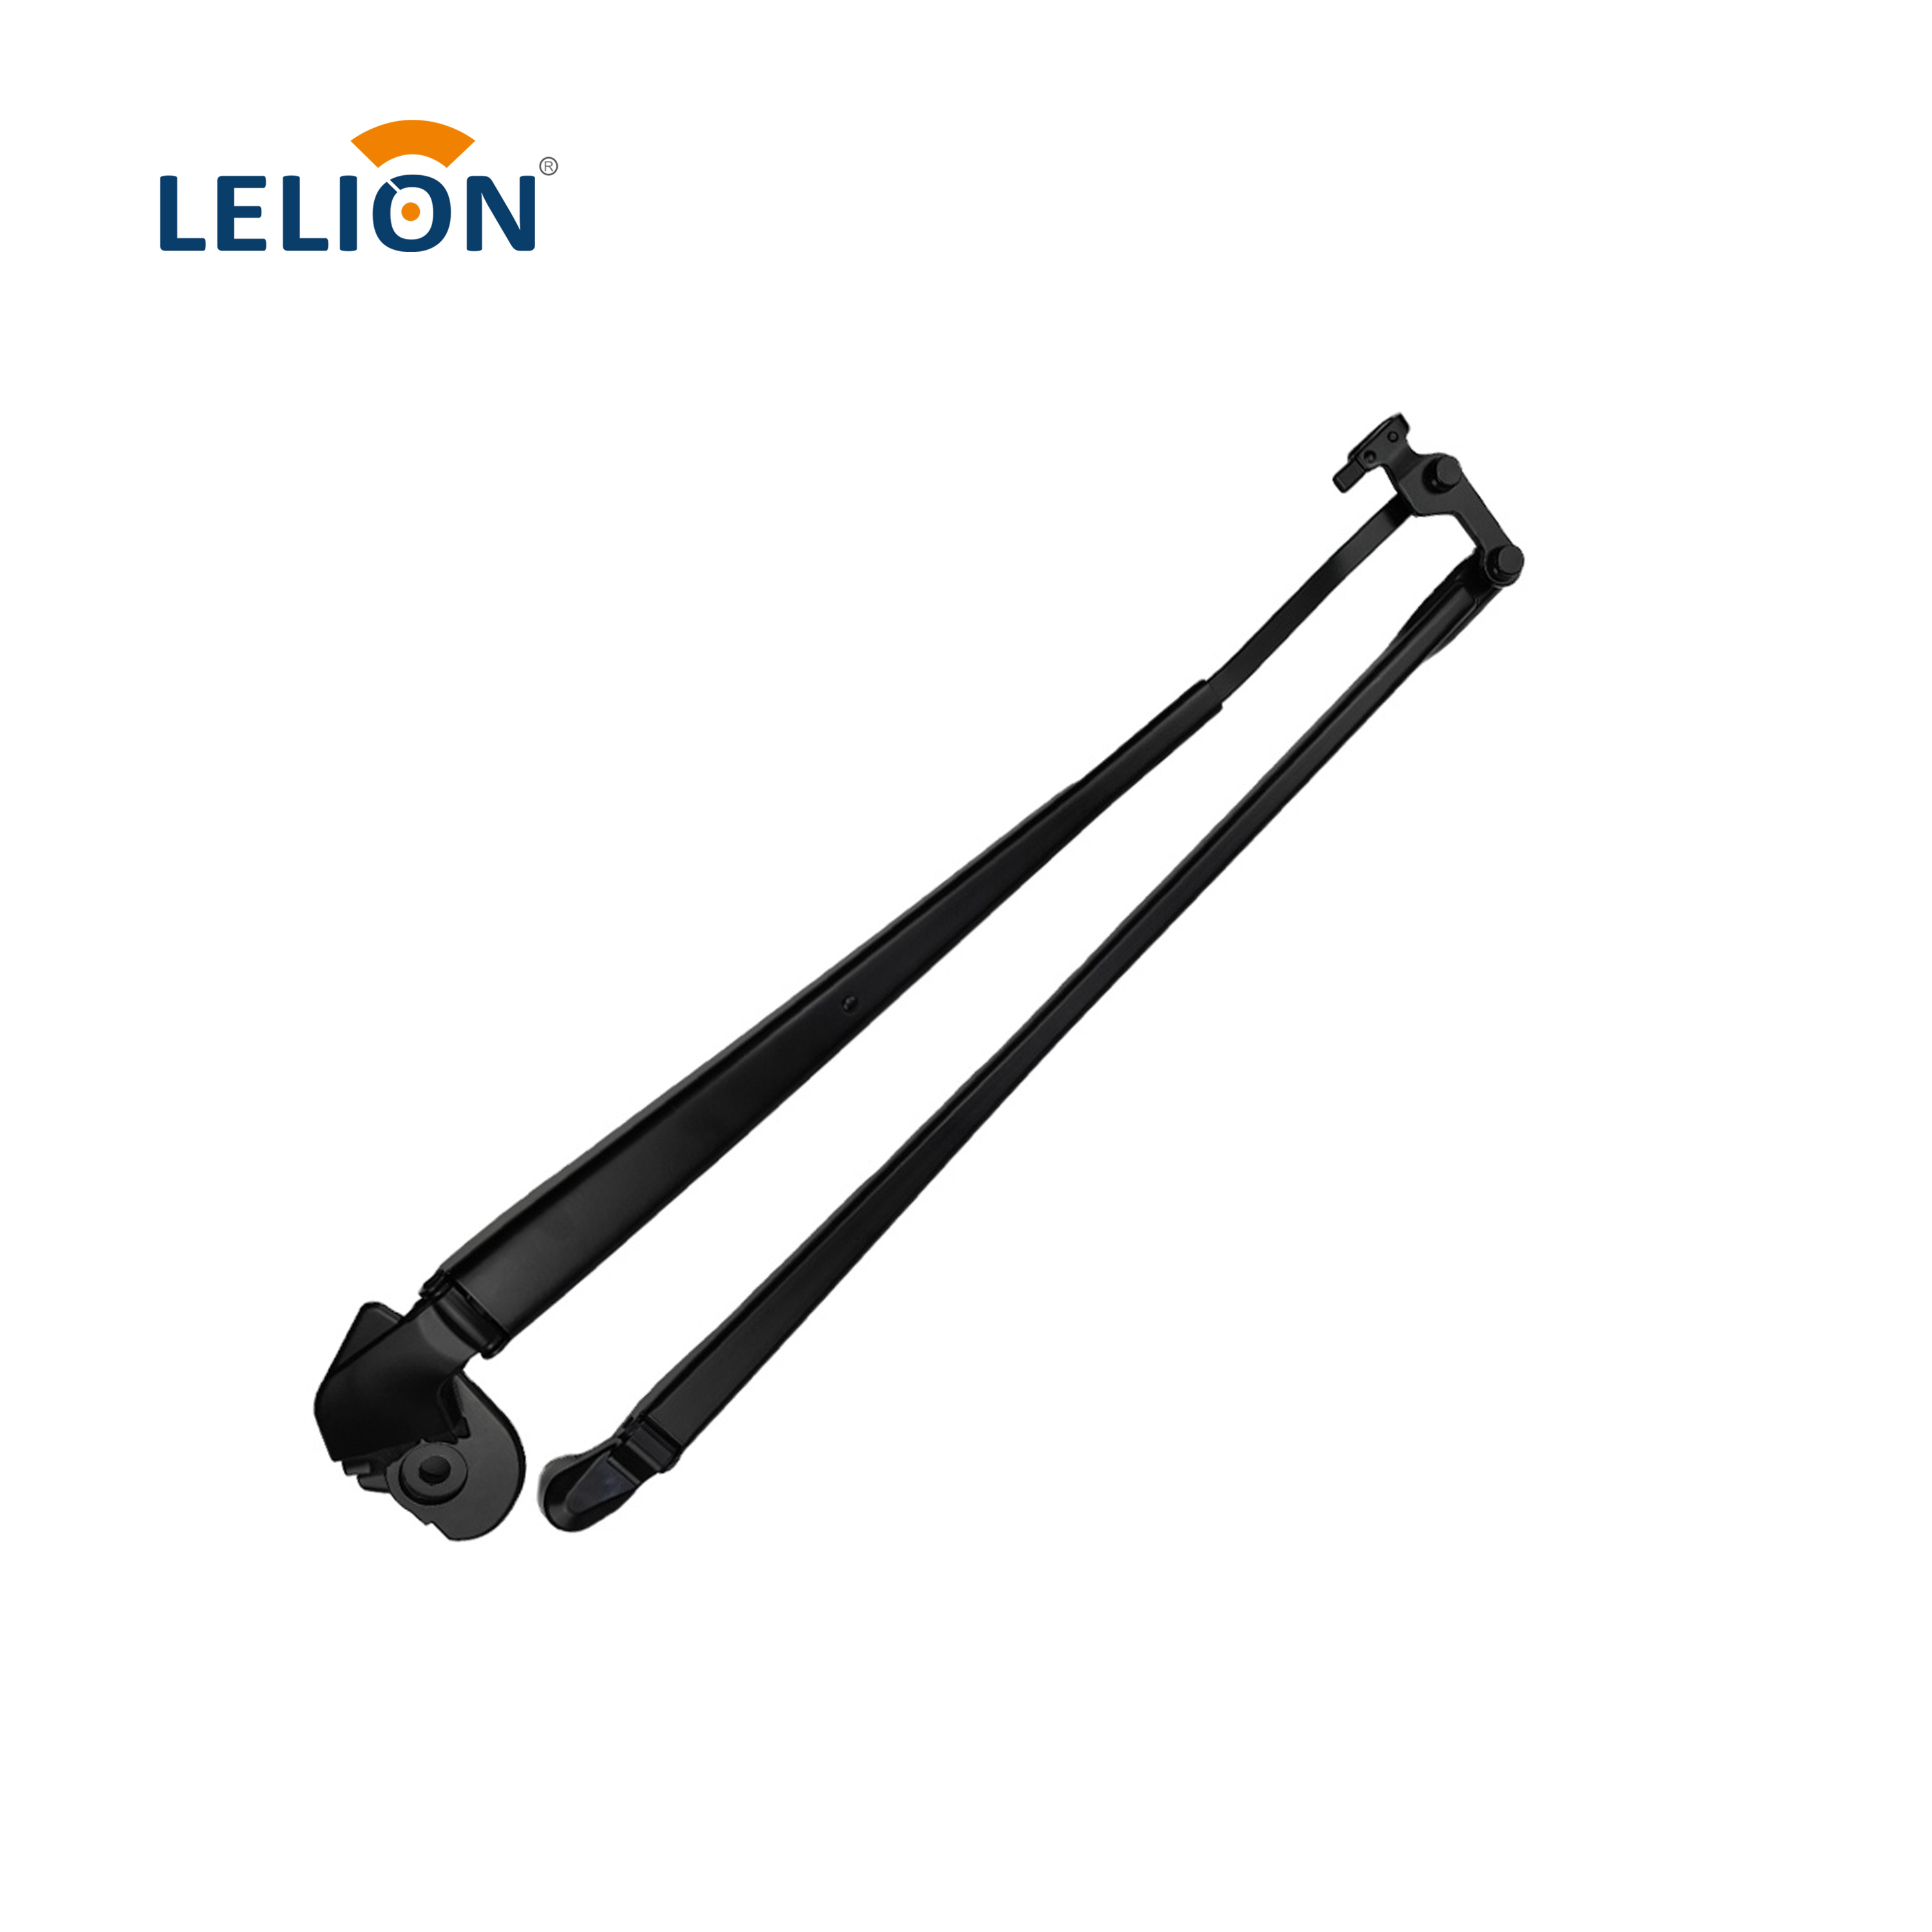 Lelion 026 Front Wiper Arm 24 inch For Toyota Yaris/Vitz KSP130 OE 8521152520